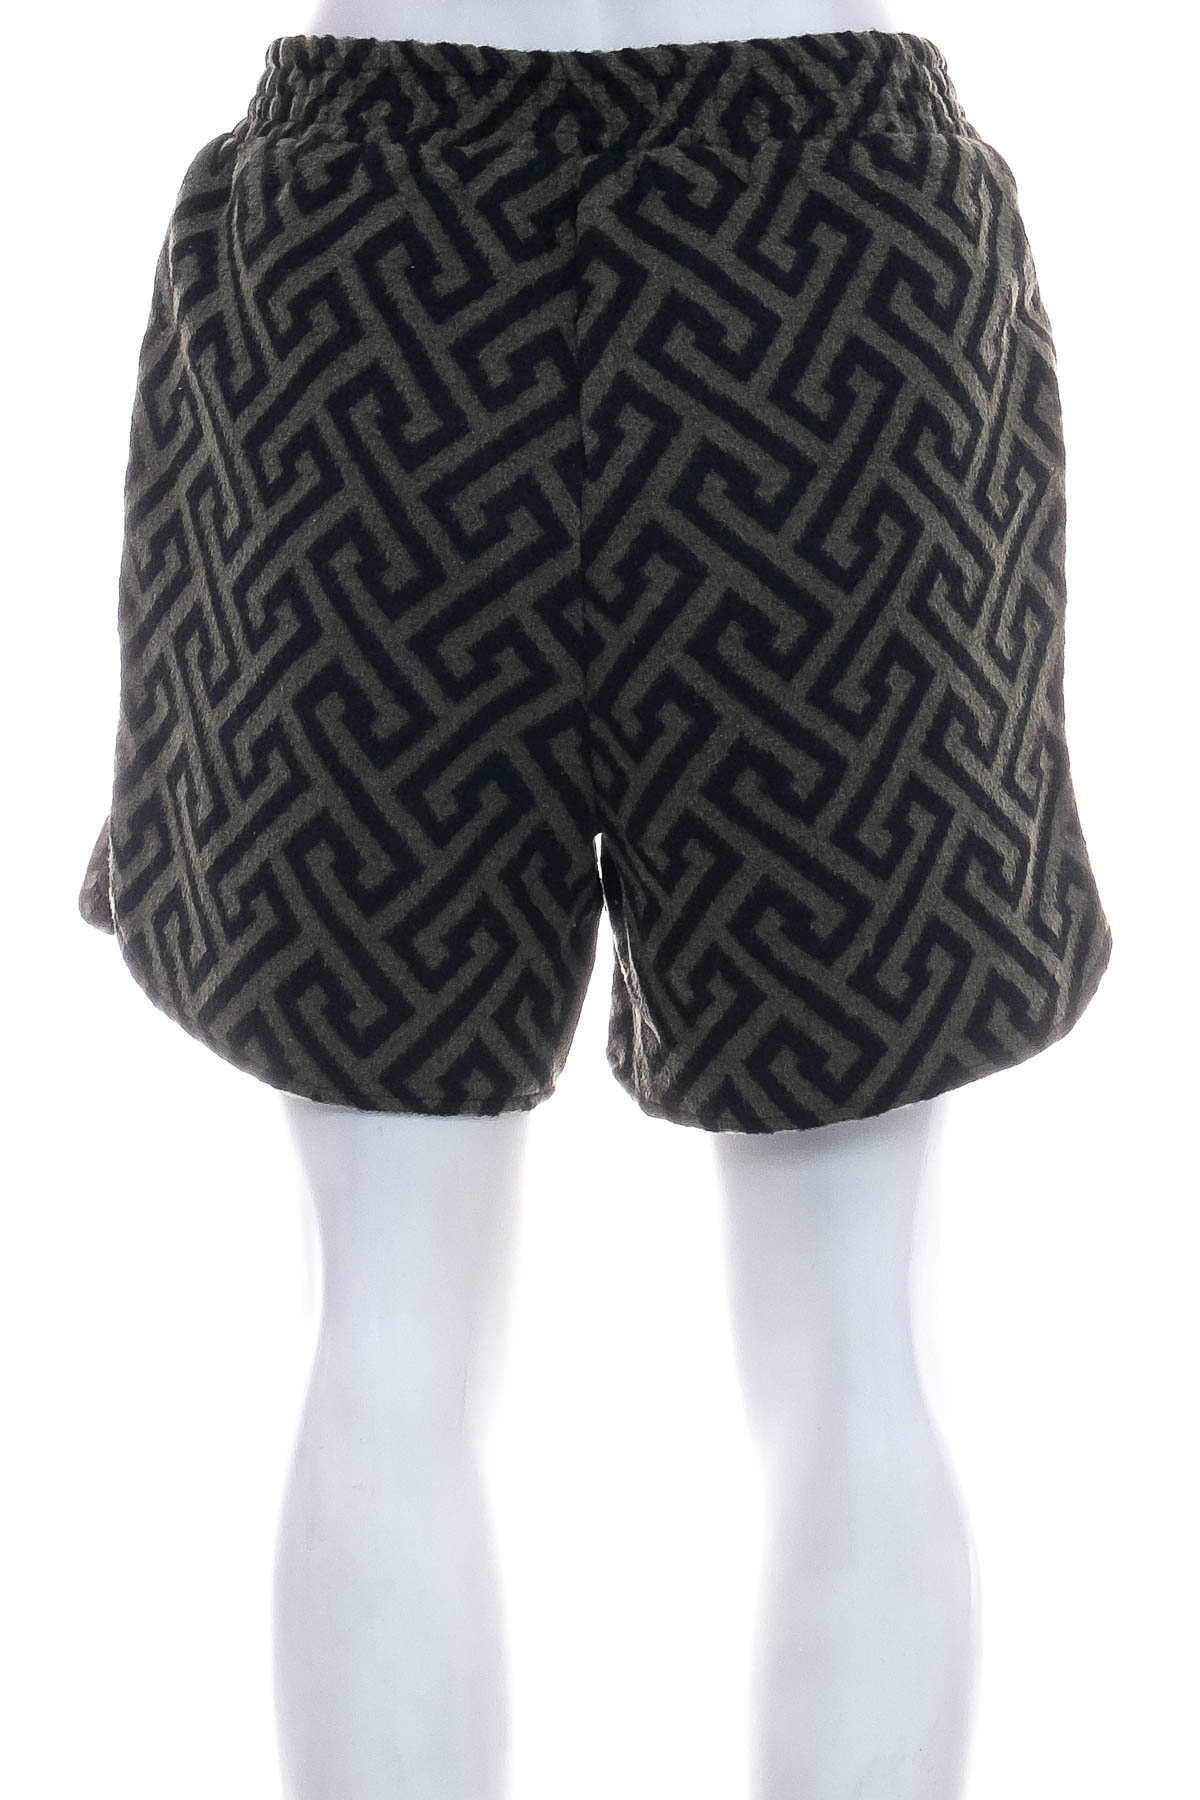 Female shorts - VERO MODA - 1